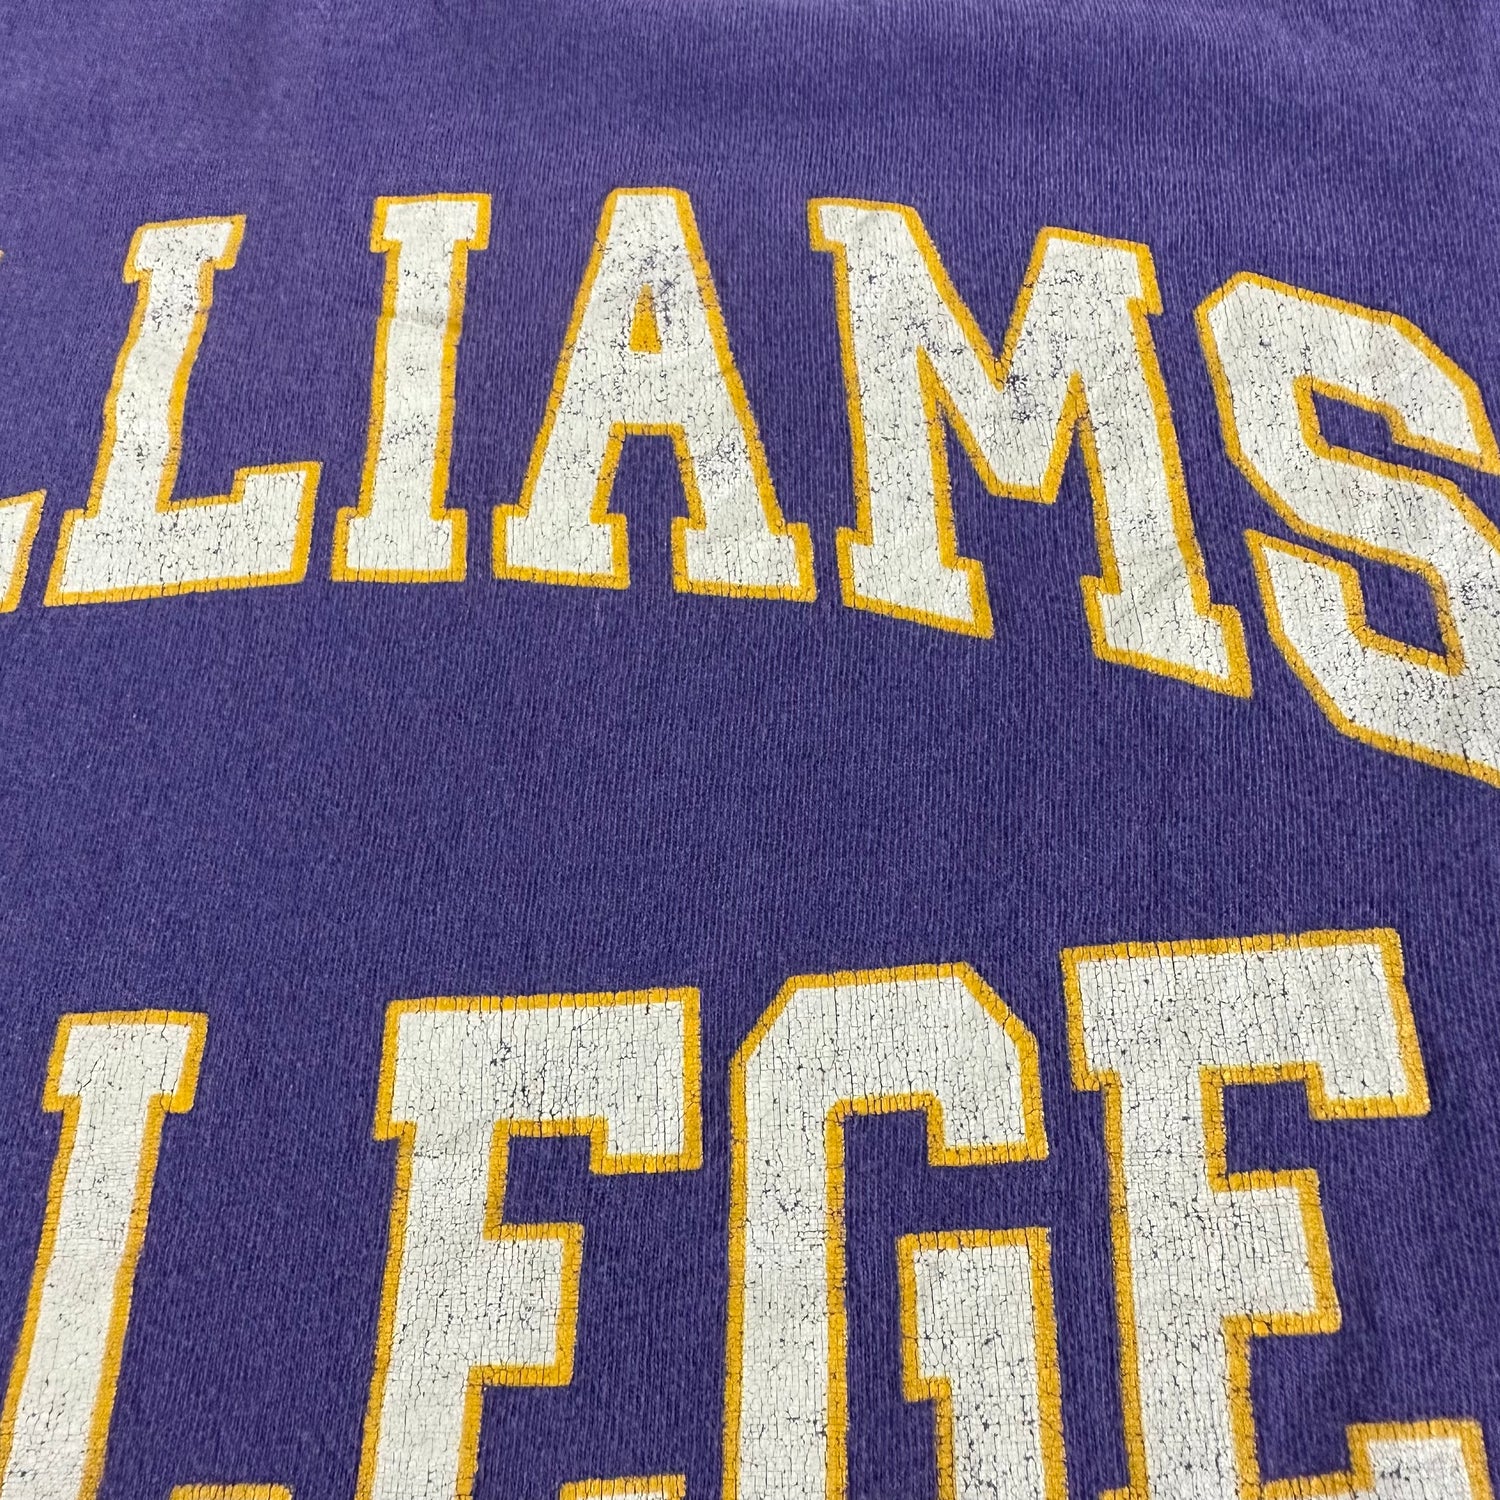 Vintage 1990s Williams College T-shirt size Large